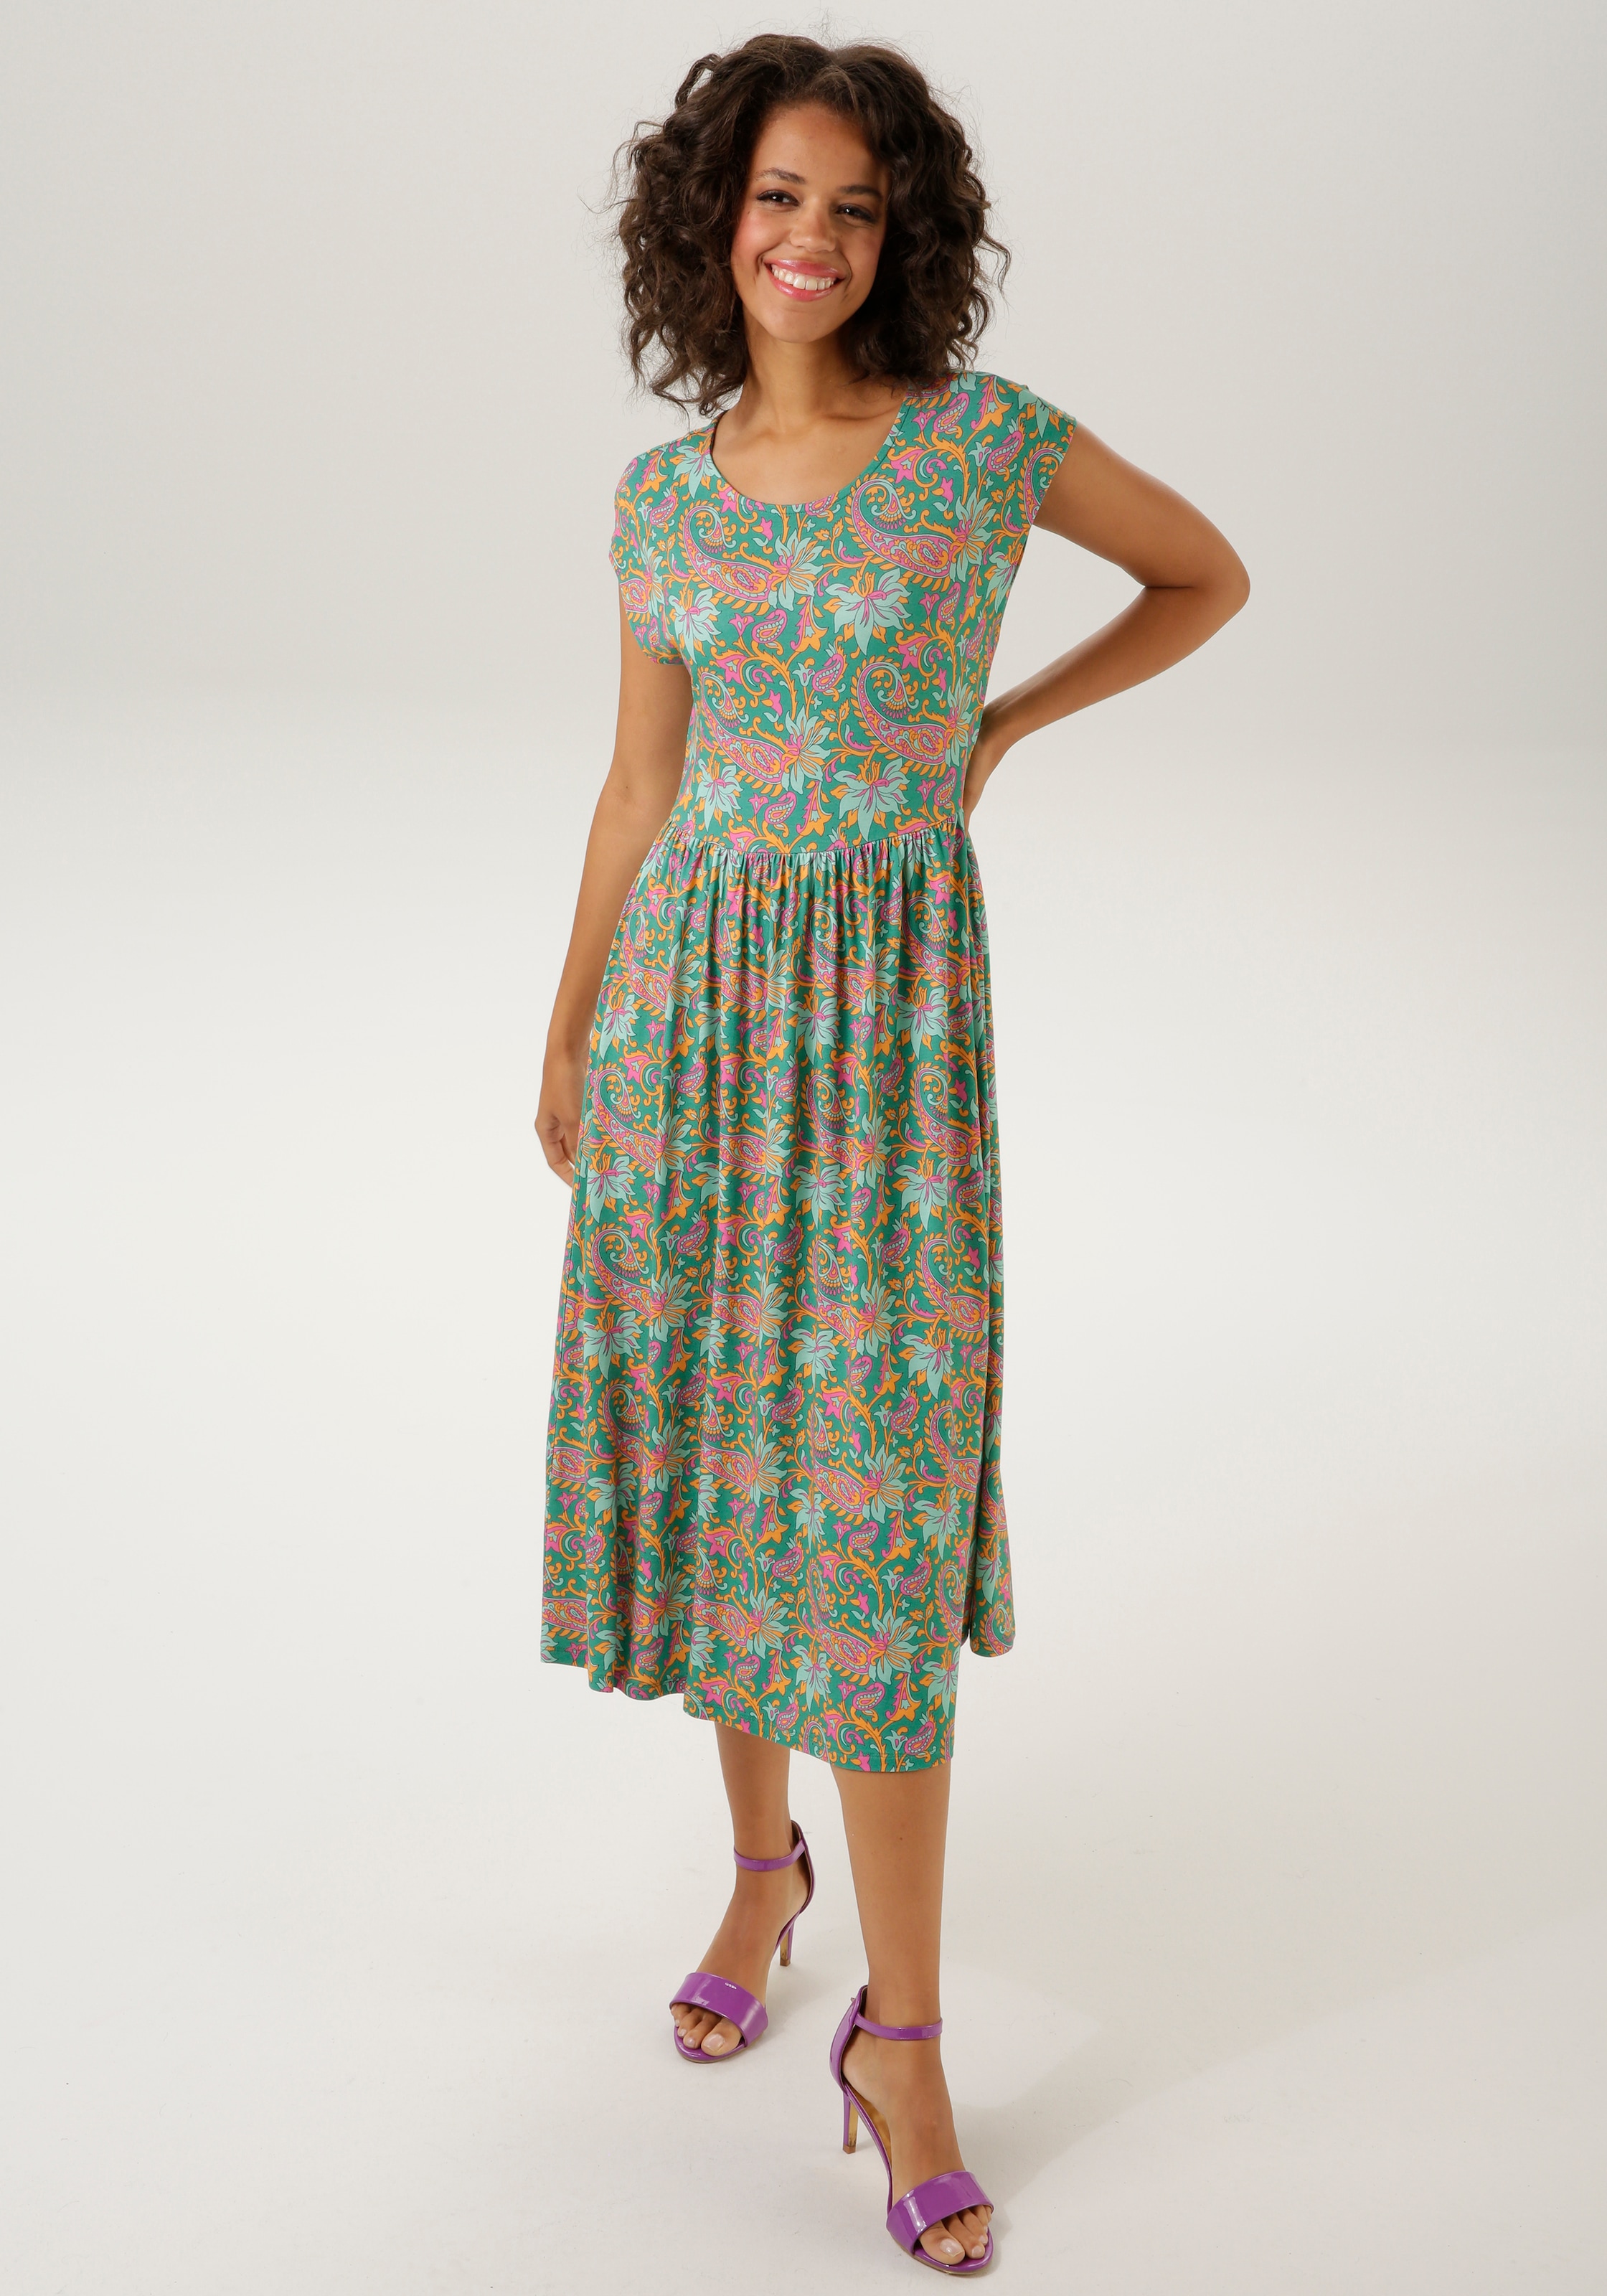 Sommerkleid, mit extravagantem Paisley-Muster bedruckt - NEUE KOLLEKTION